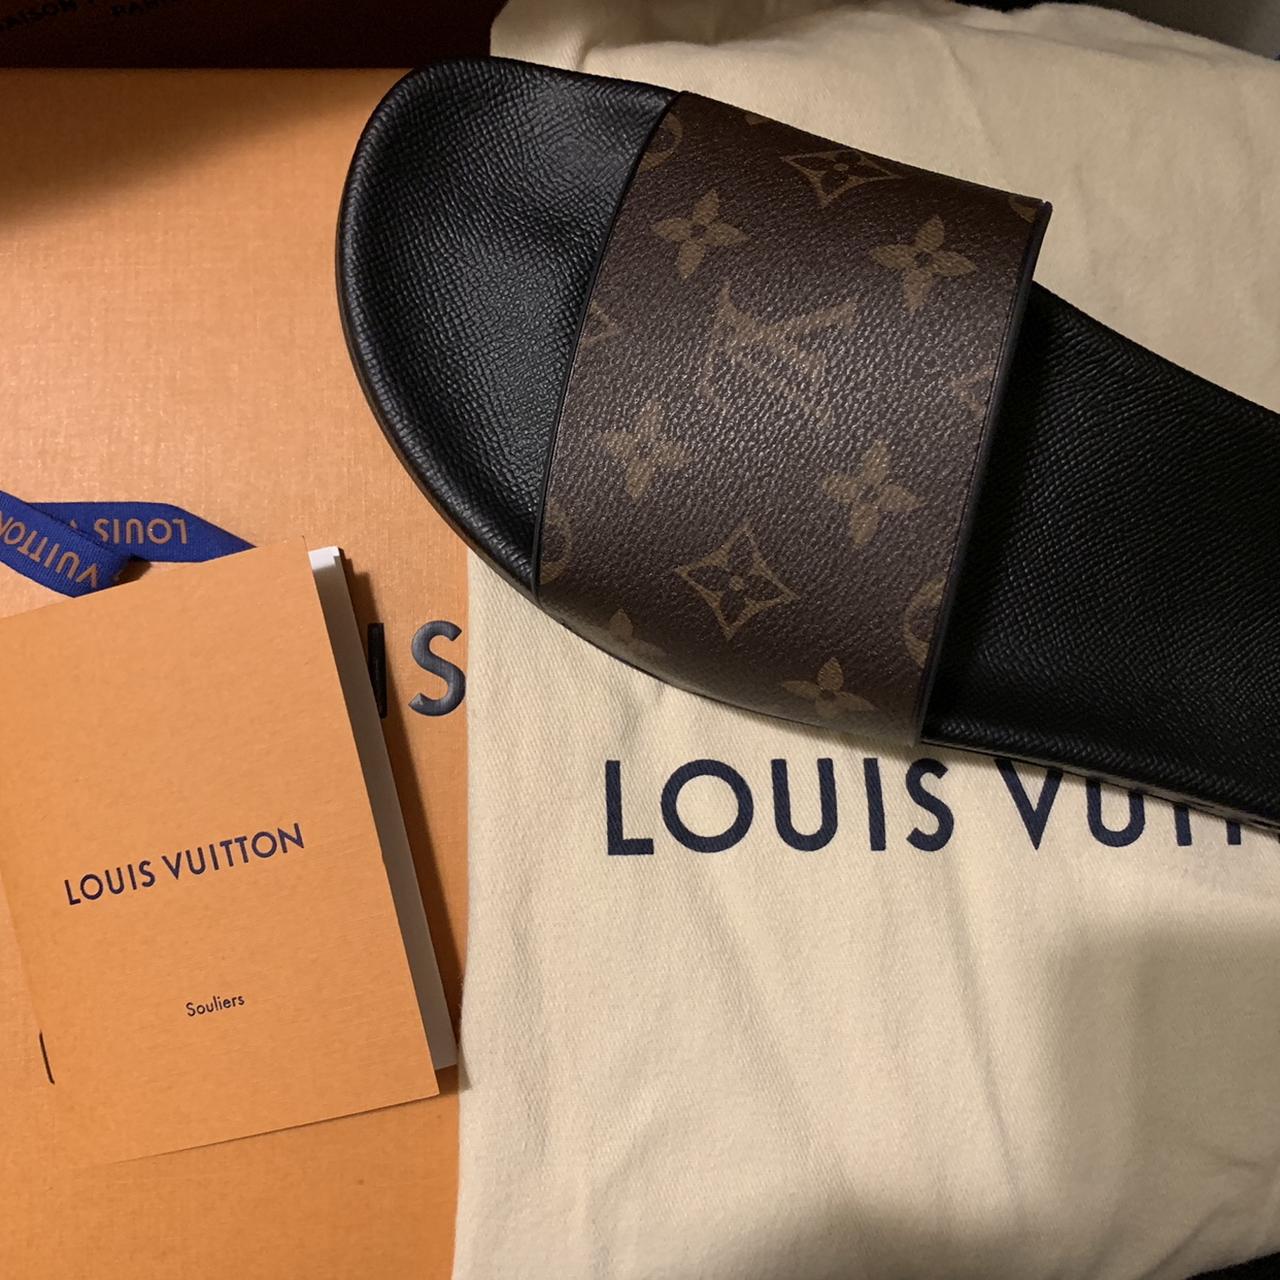 Louis Vuitton Waterfront Mule White Monogram Slides - Depop